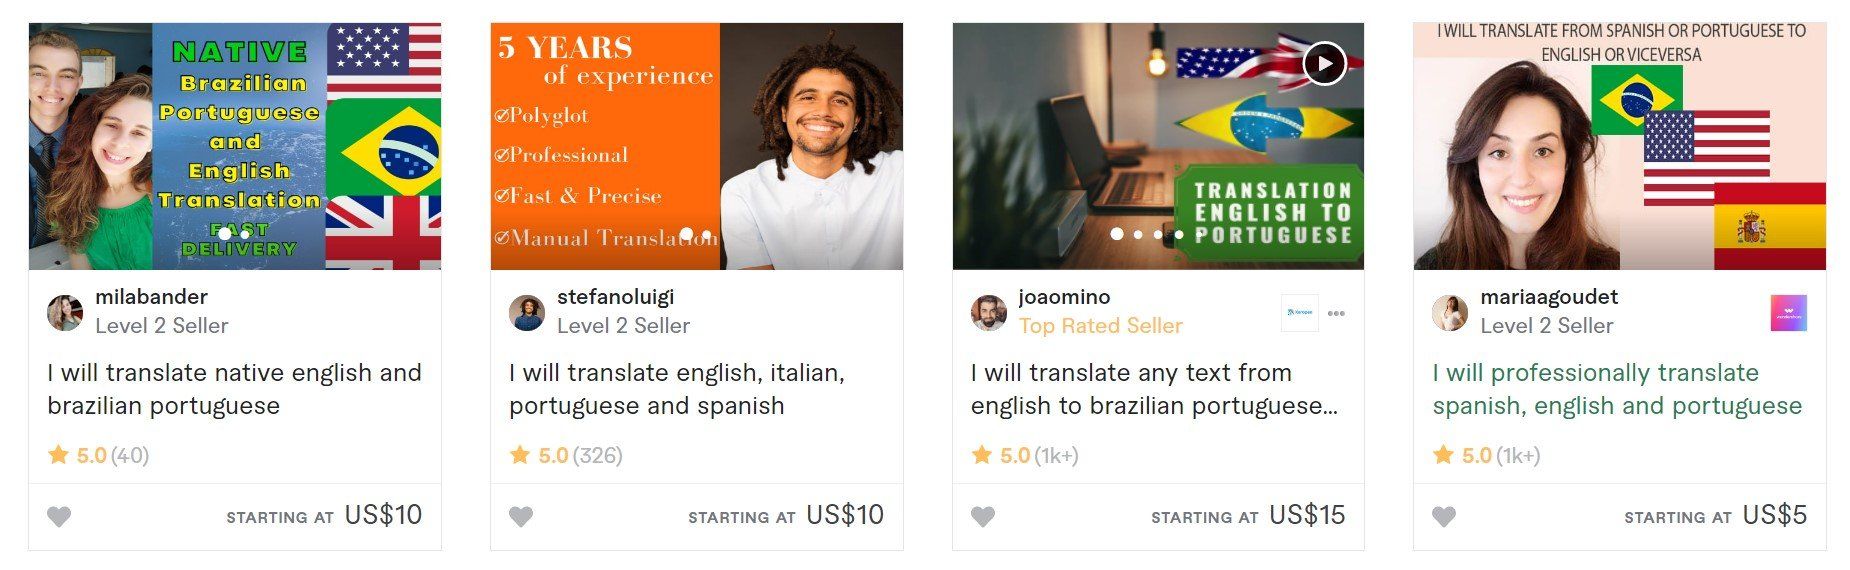 How to translate a website in Portuguese language - translator portuguese